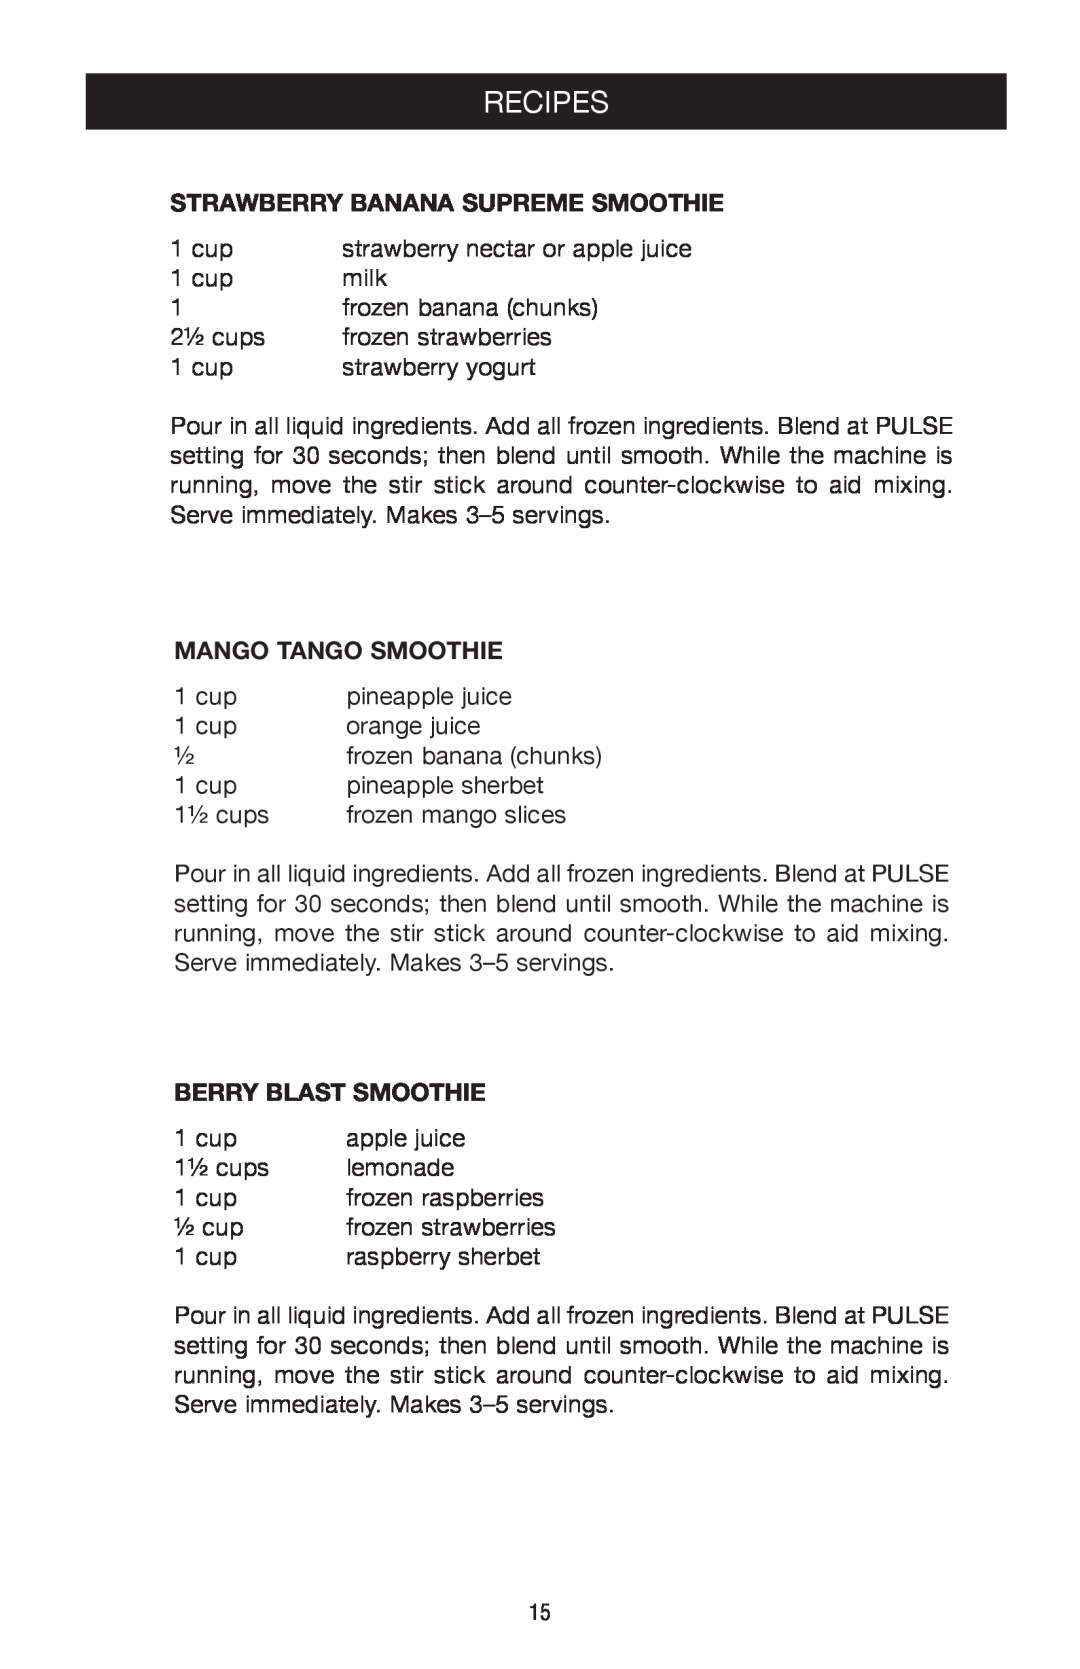 West Bend 3000 manual Recipes, Strawberry Banana Supreme Smoothie, Mango Tango Smoothie, Berry Blast Smoothie 